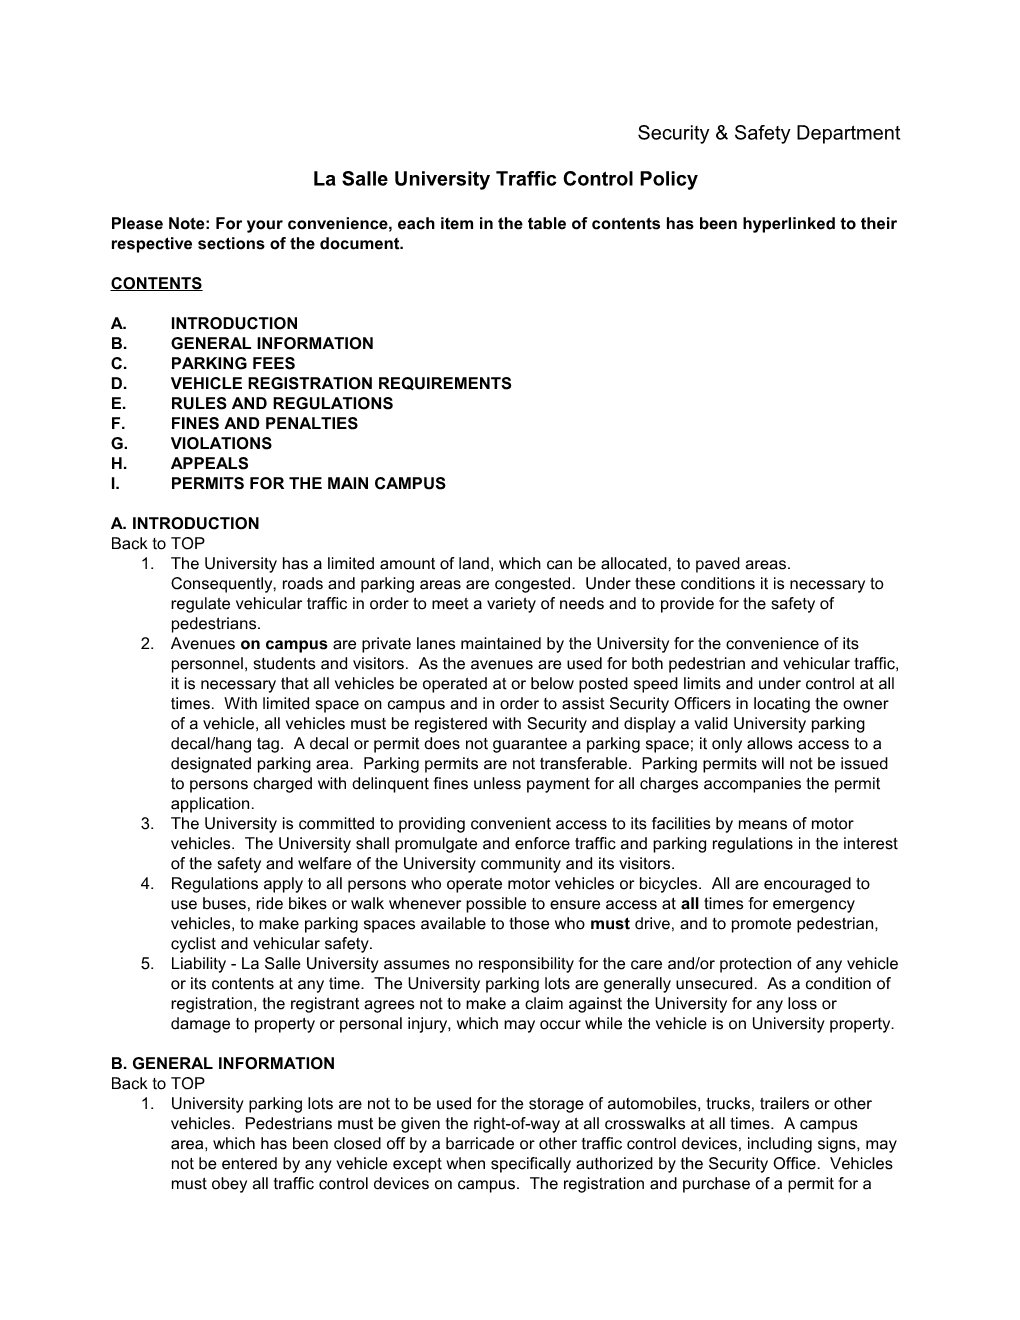 La Salle University Traffic Control Policy